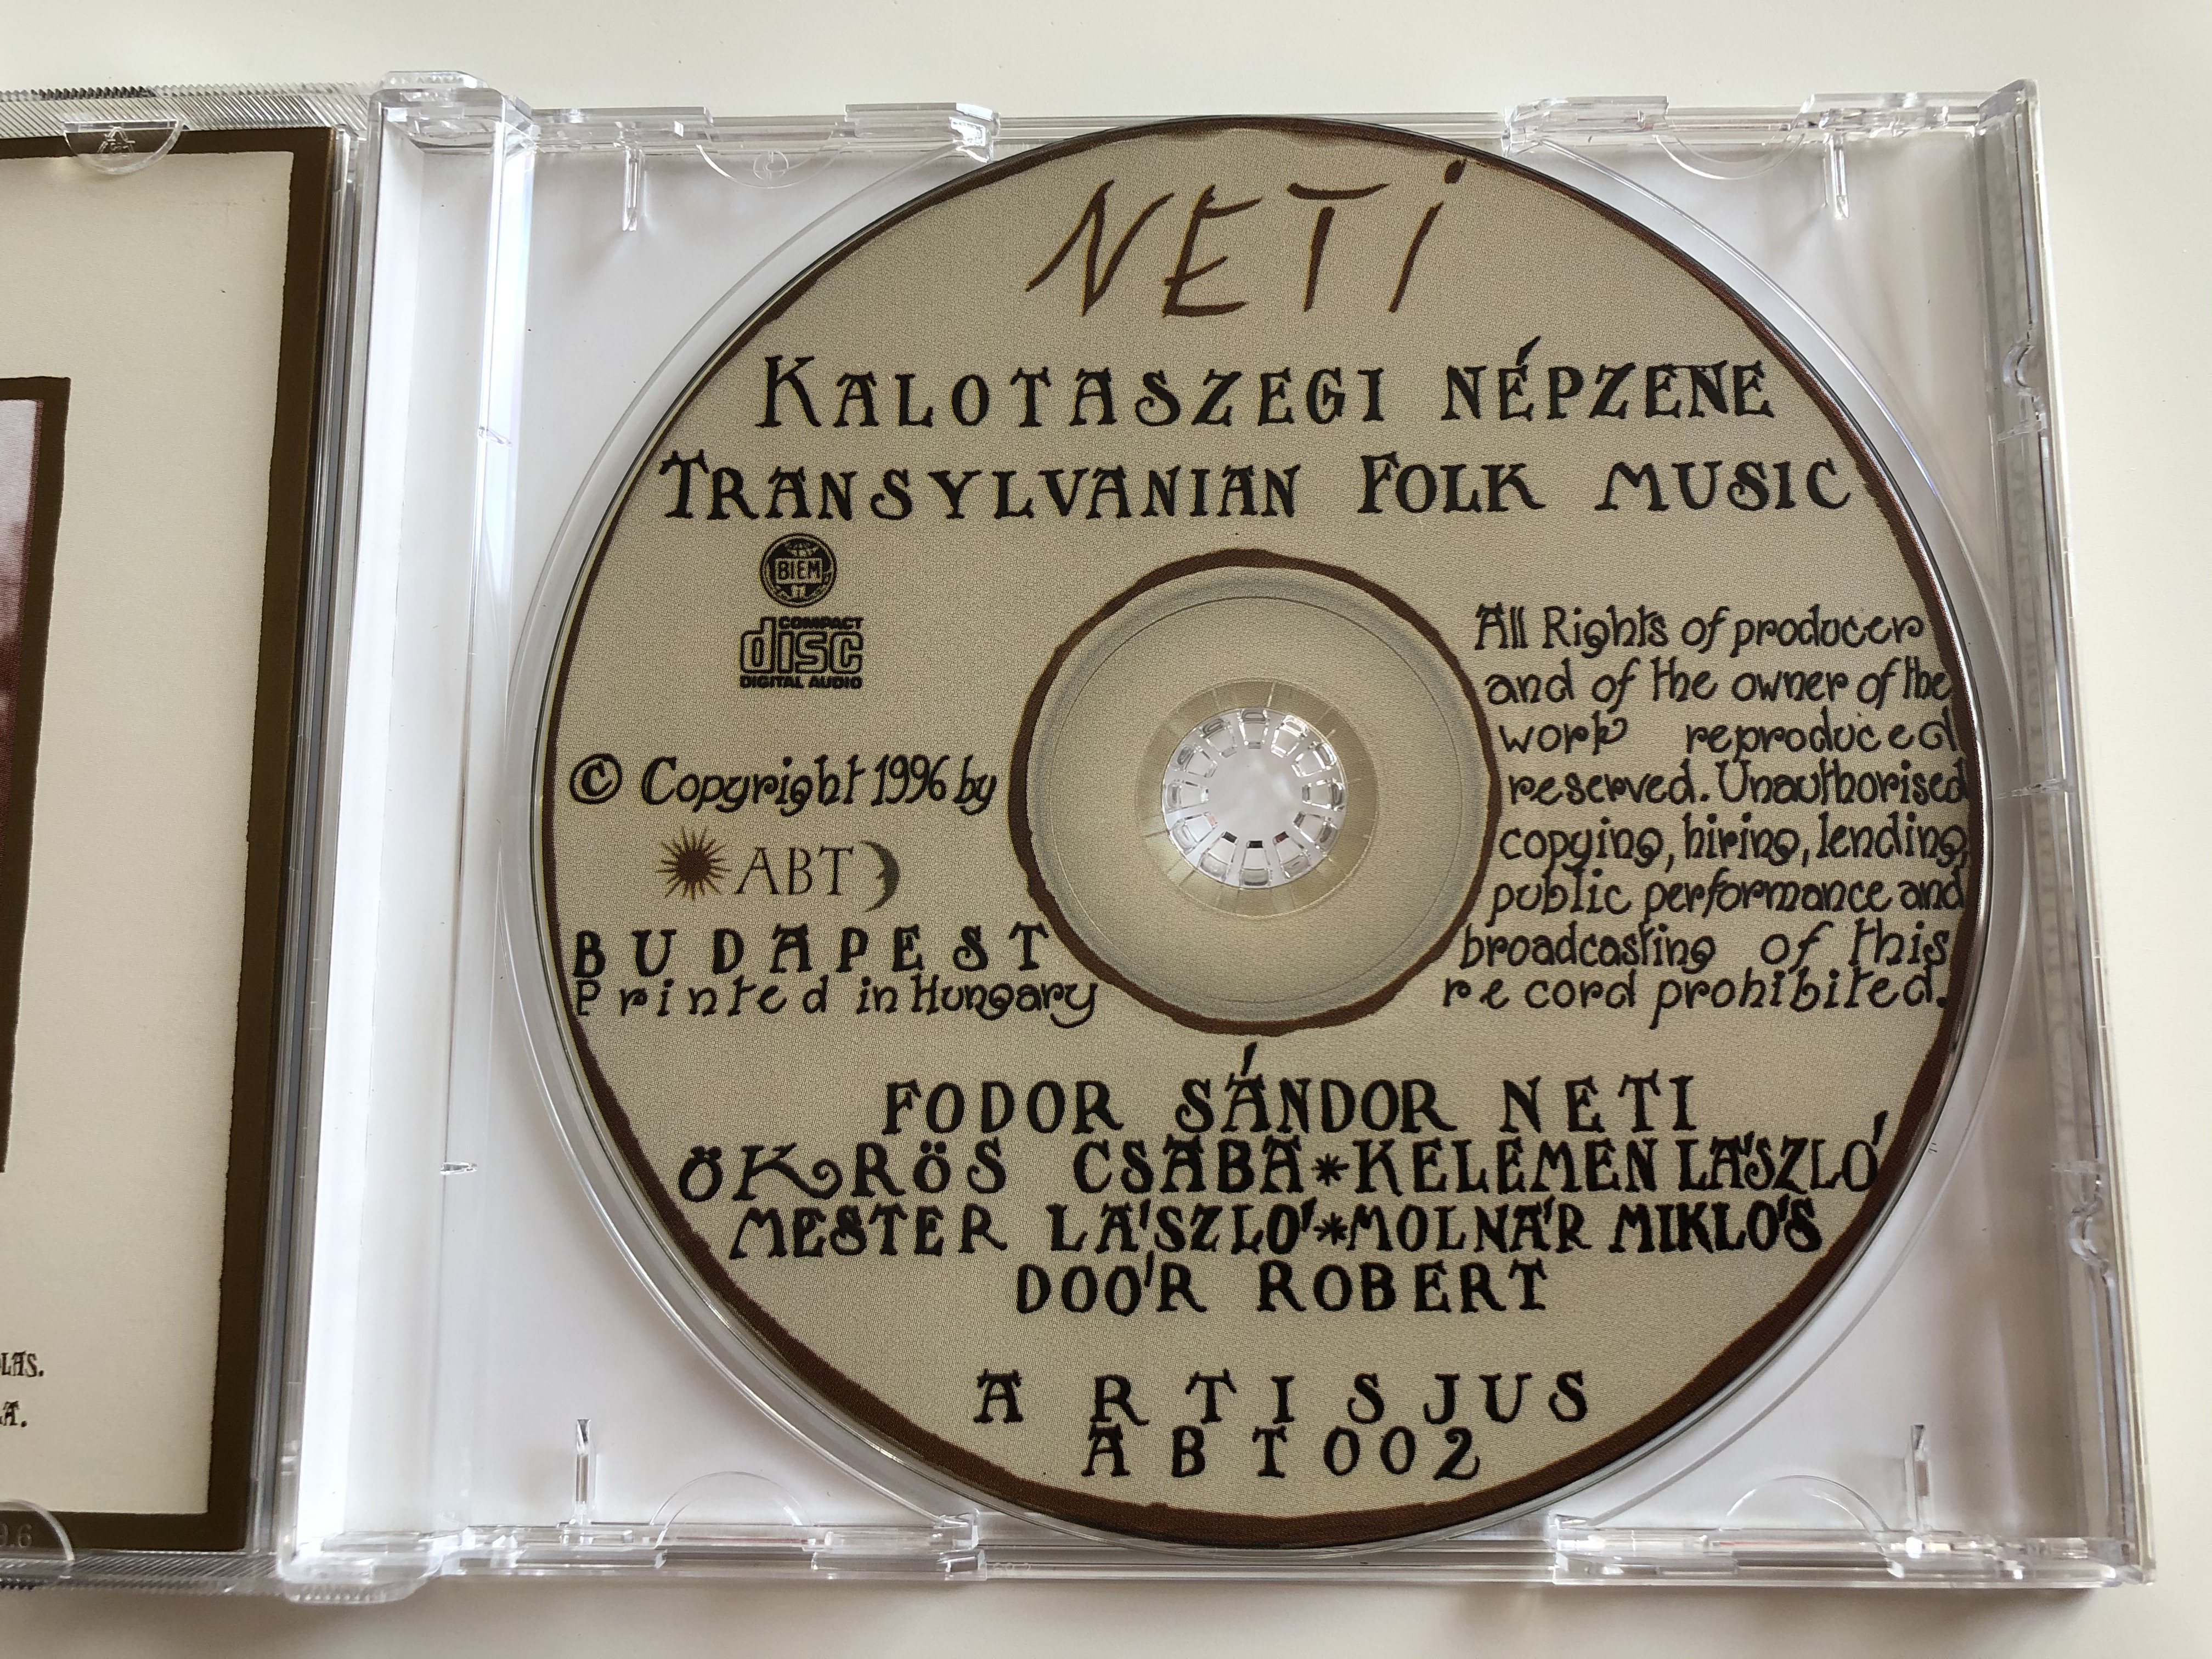 neti-1922-2004-kalotaszegi-n-pzene-transylvanian-folk-music-abt-budapest-audio-cd-abt-002-7-.jpg